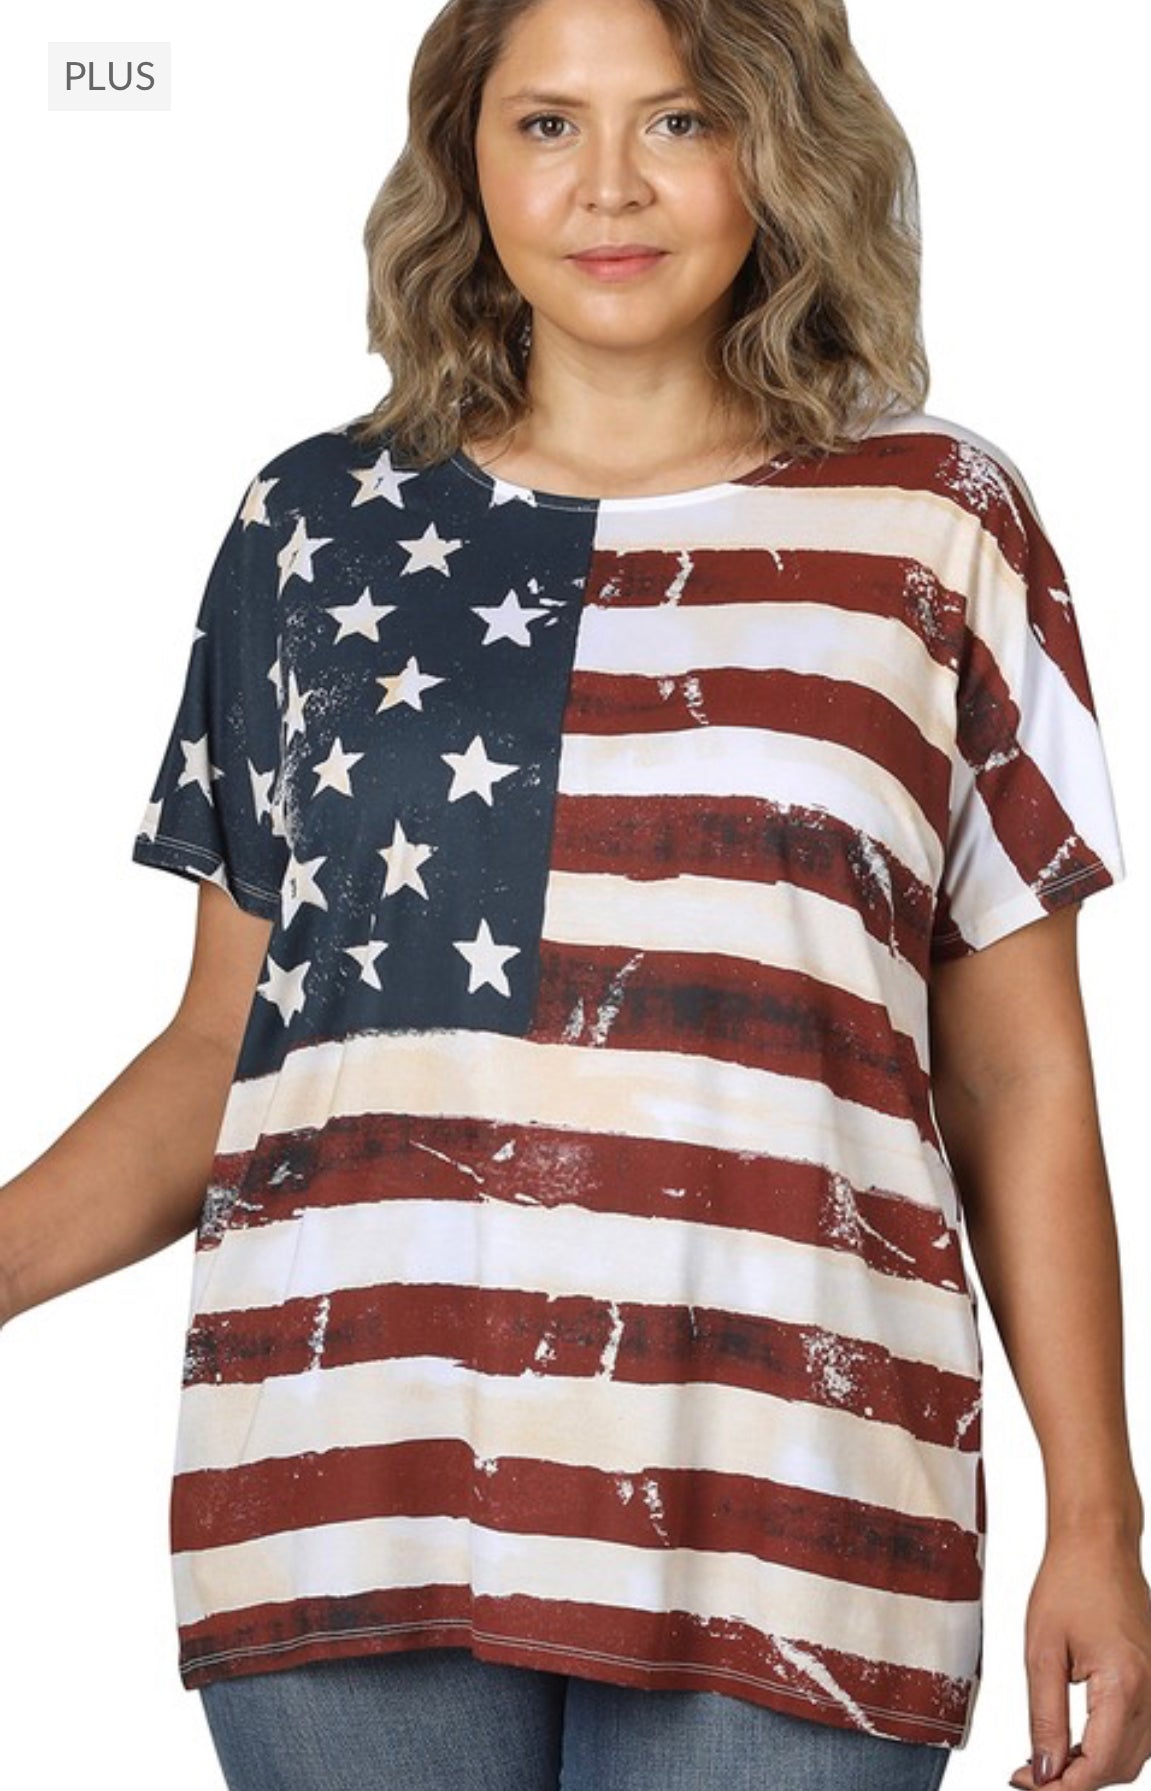 American Flag T shirt